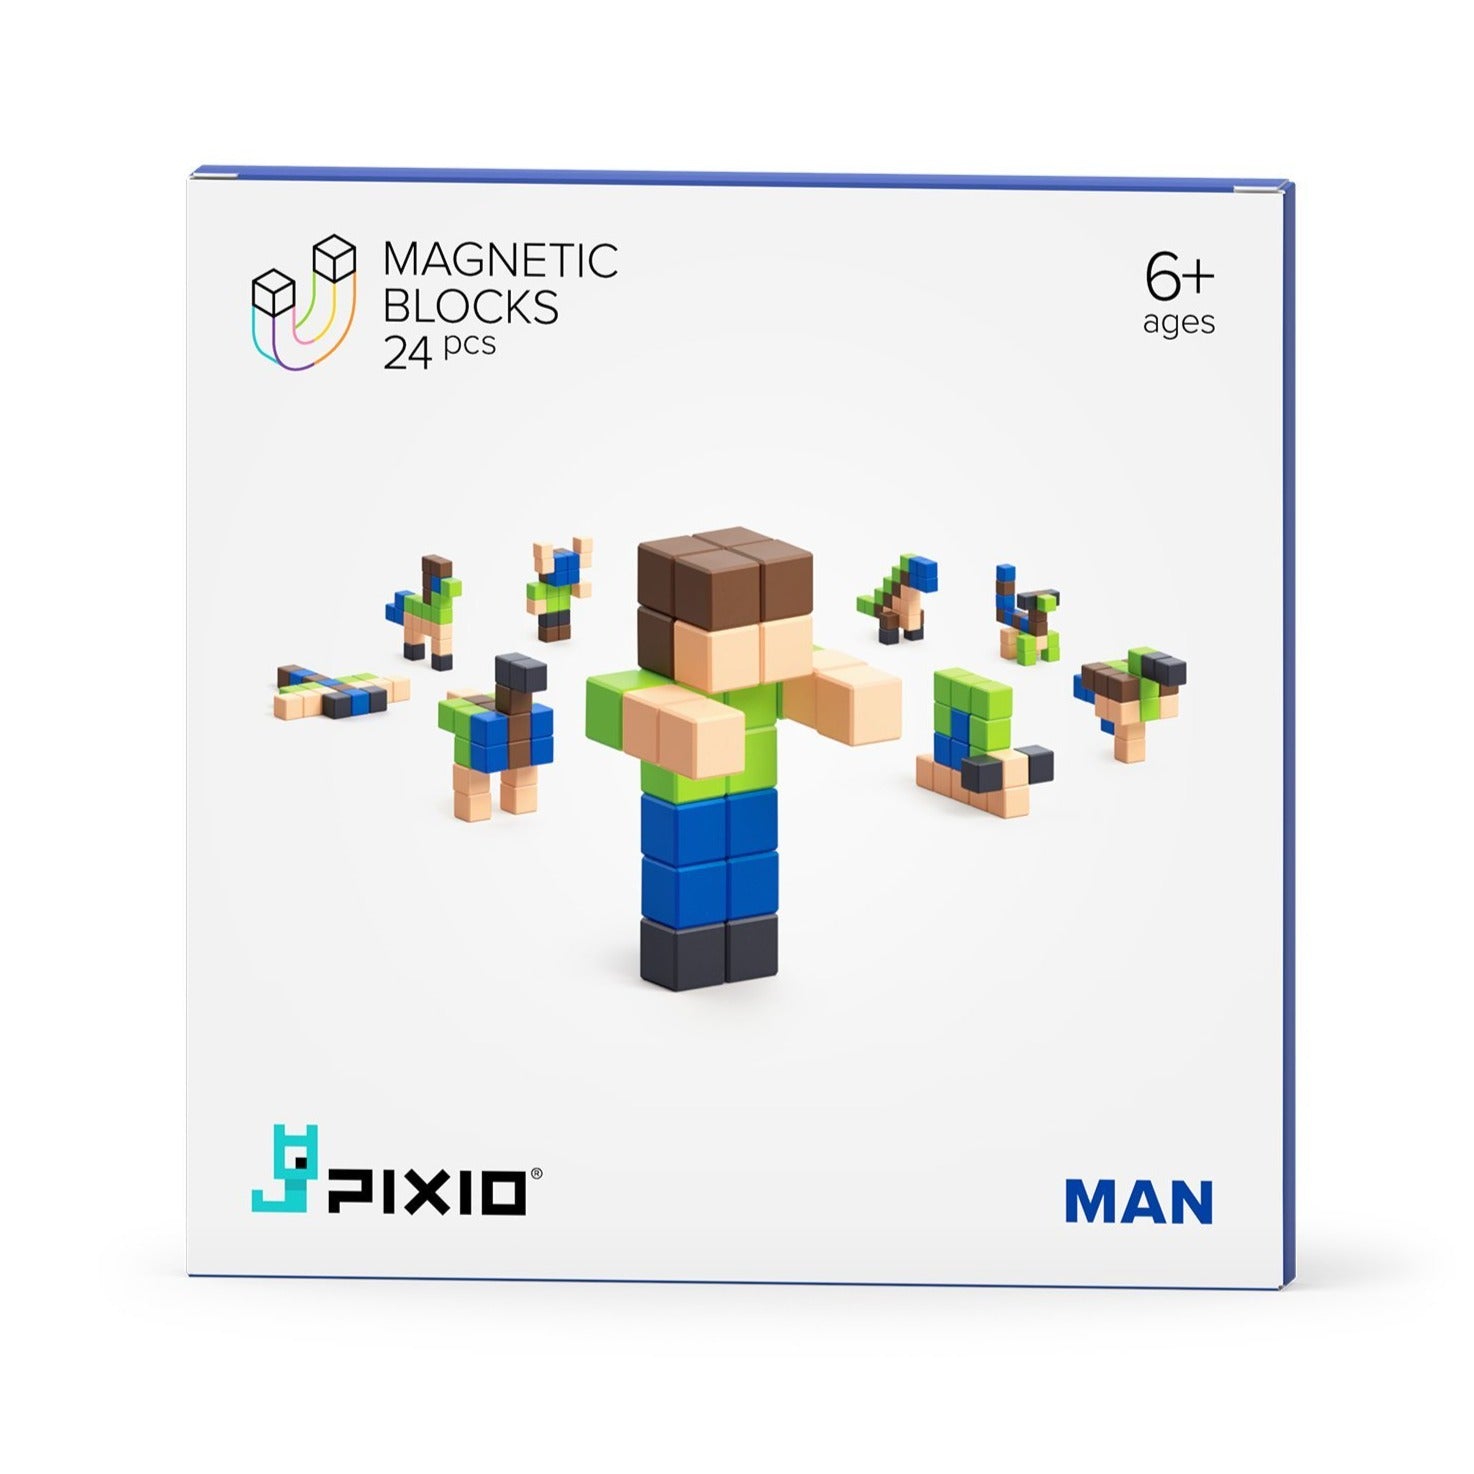 Pixio-Man-Story-Series-Magnetic-Blocks-1050101-2_2000x_94a88442-65a1-4a49-81c7-0d11cba9b6f3.jpg